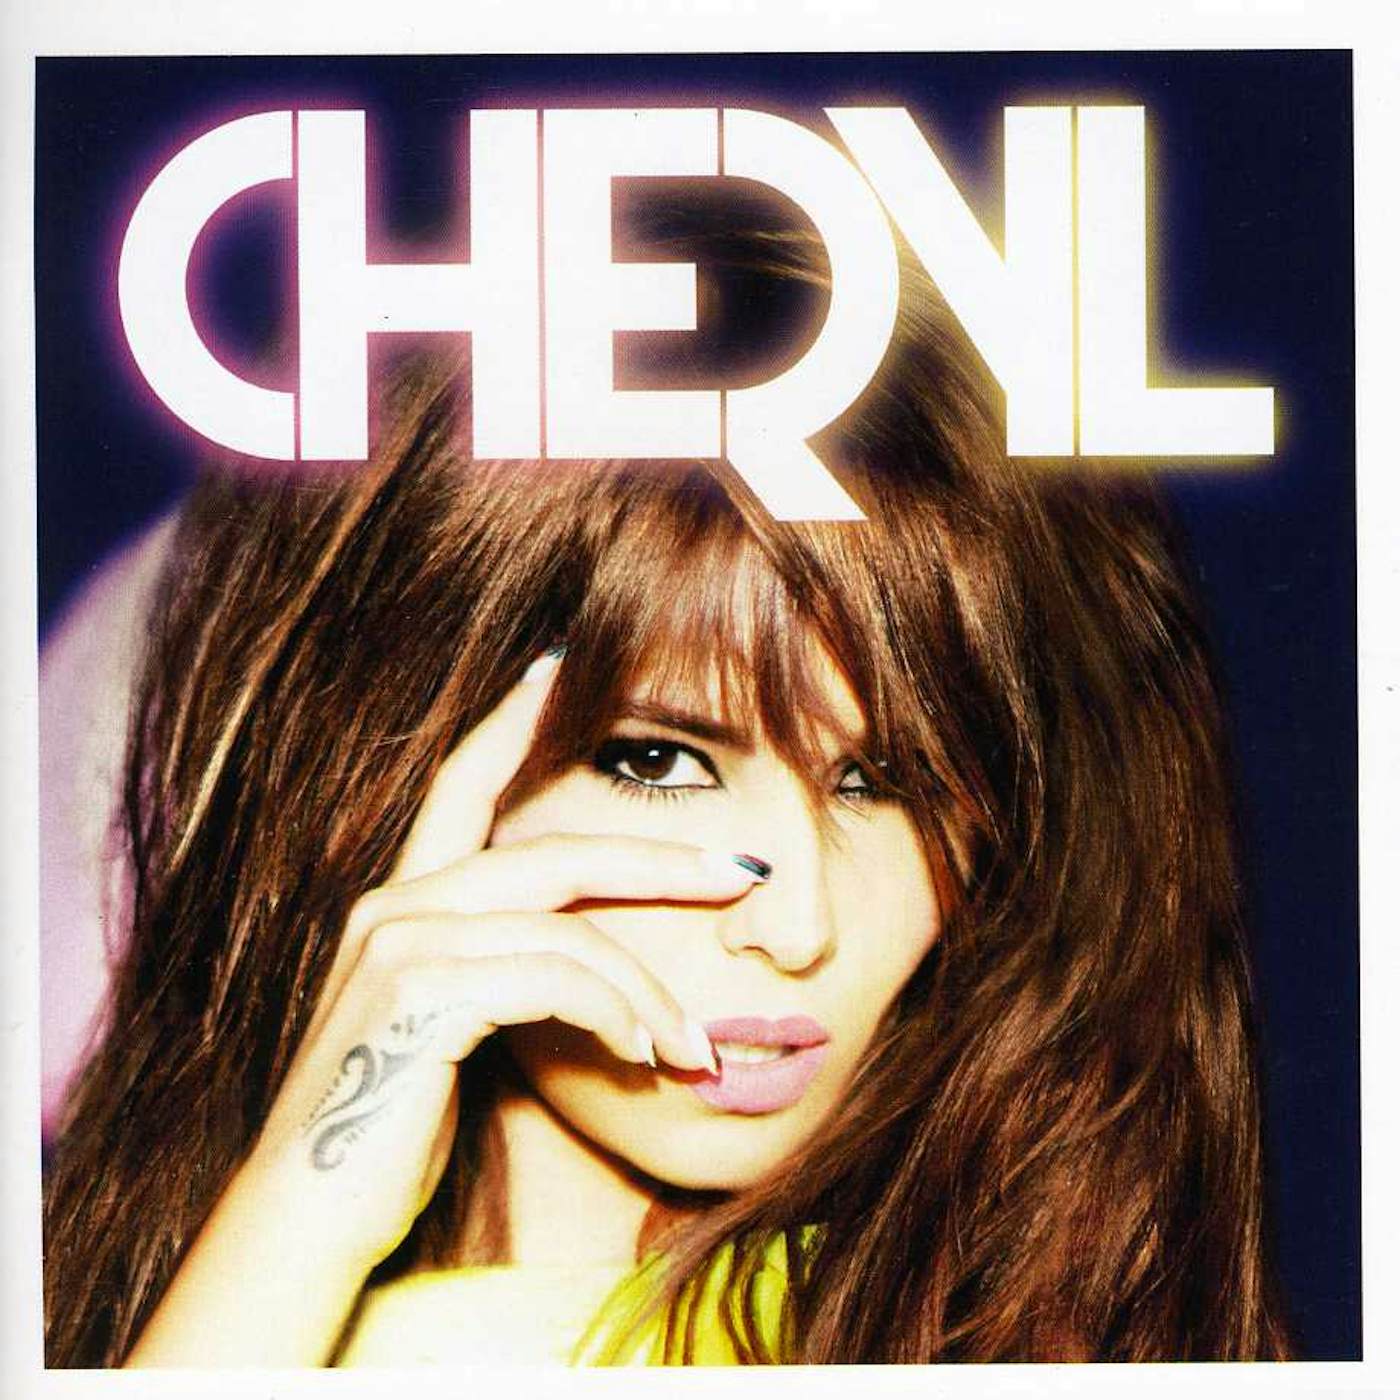 Cheryl MILLION LIGHTS CD